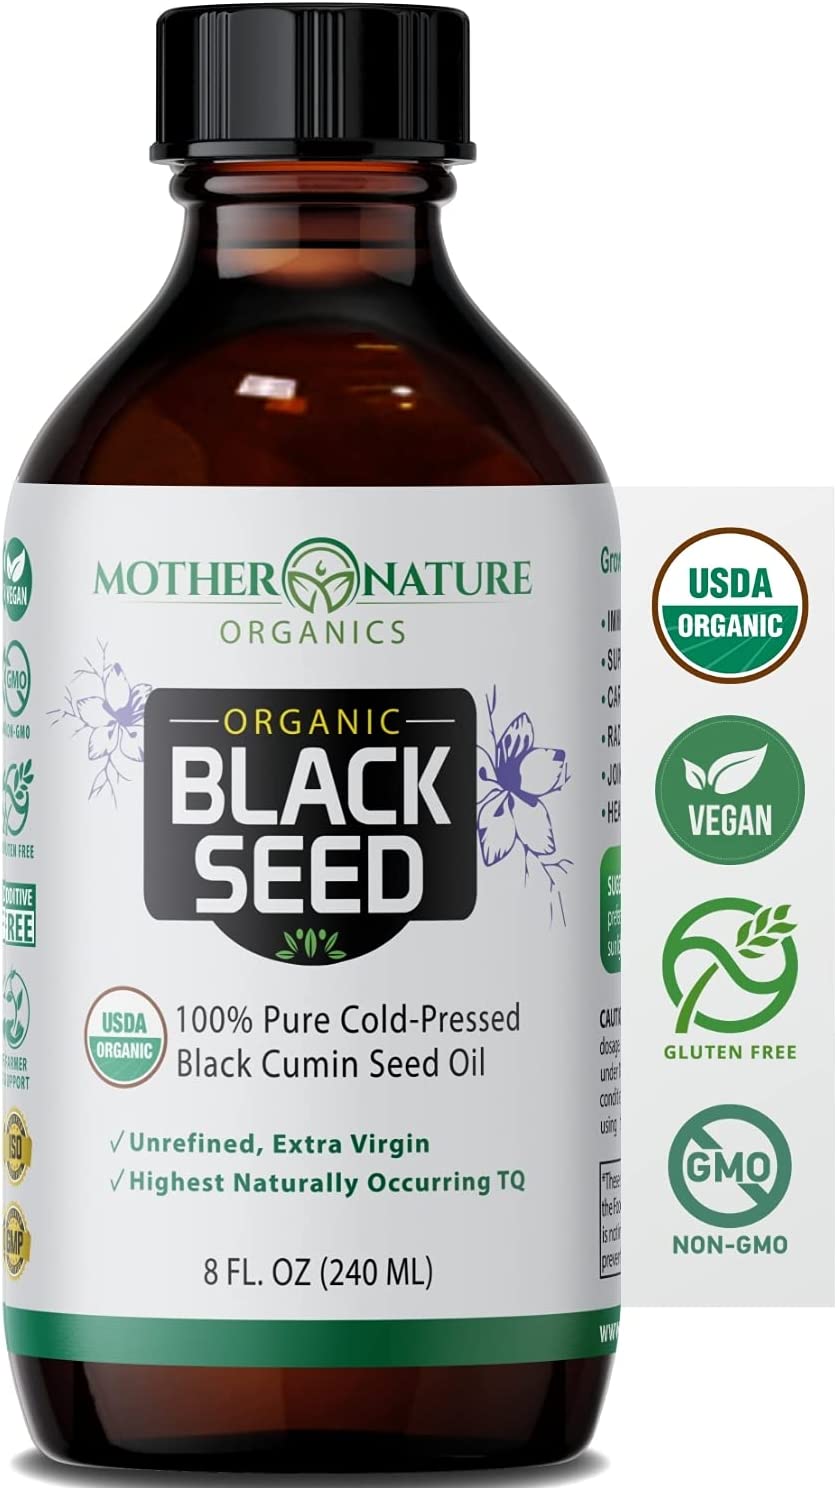 Mother Nature Organics Certified Premium Black Cumin Seed Oil